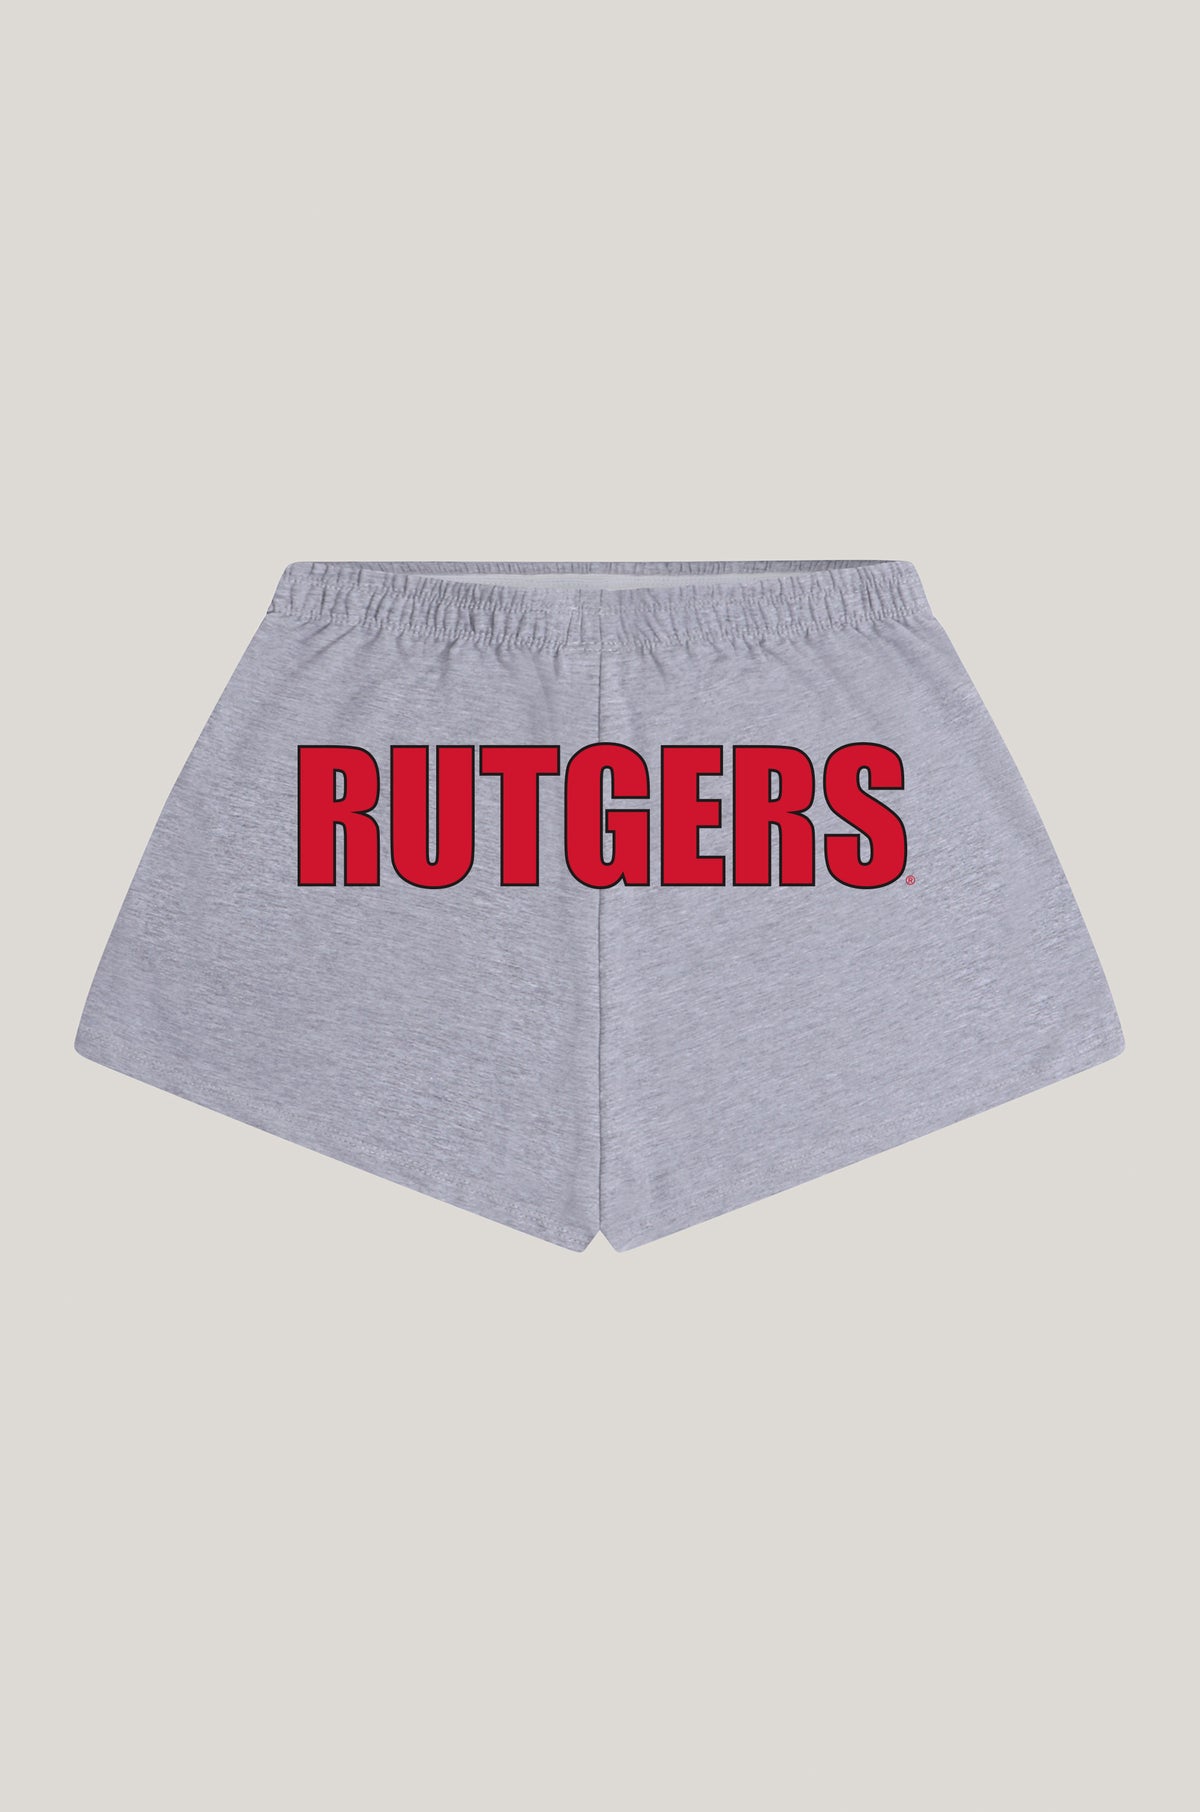 Rutgers Soffee Shorts